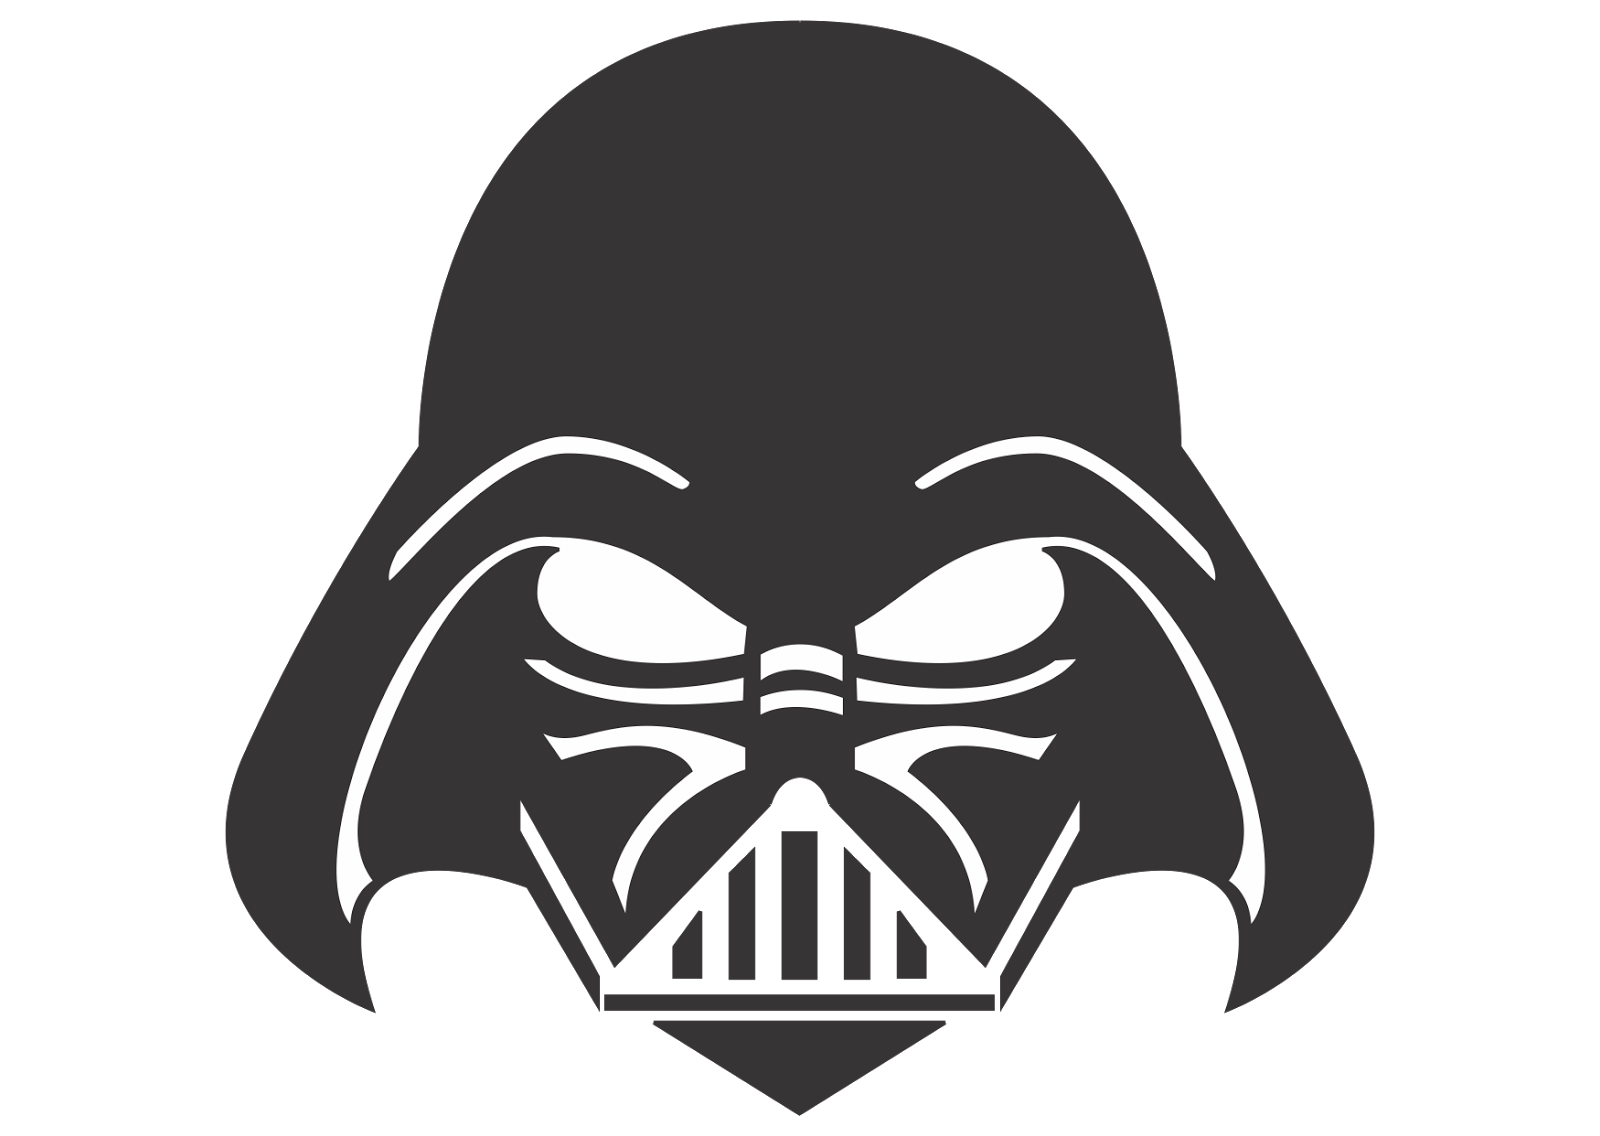 Маска Darth Vader vector. Шлем Дарта Вейдера вектор. Звёздные войны шлем Дарта Вейдера. Голова Дарт Вейдер Стар ВАРС. Голова дарта вейдера